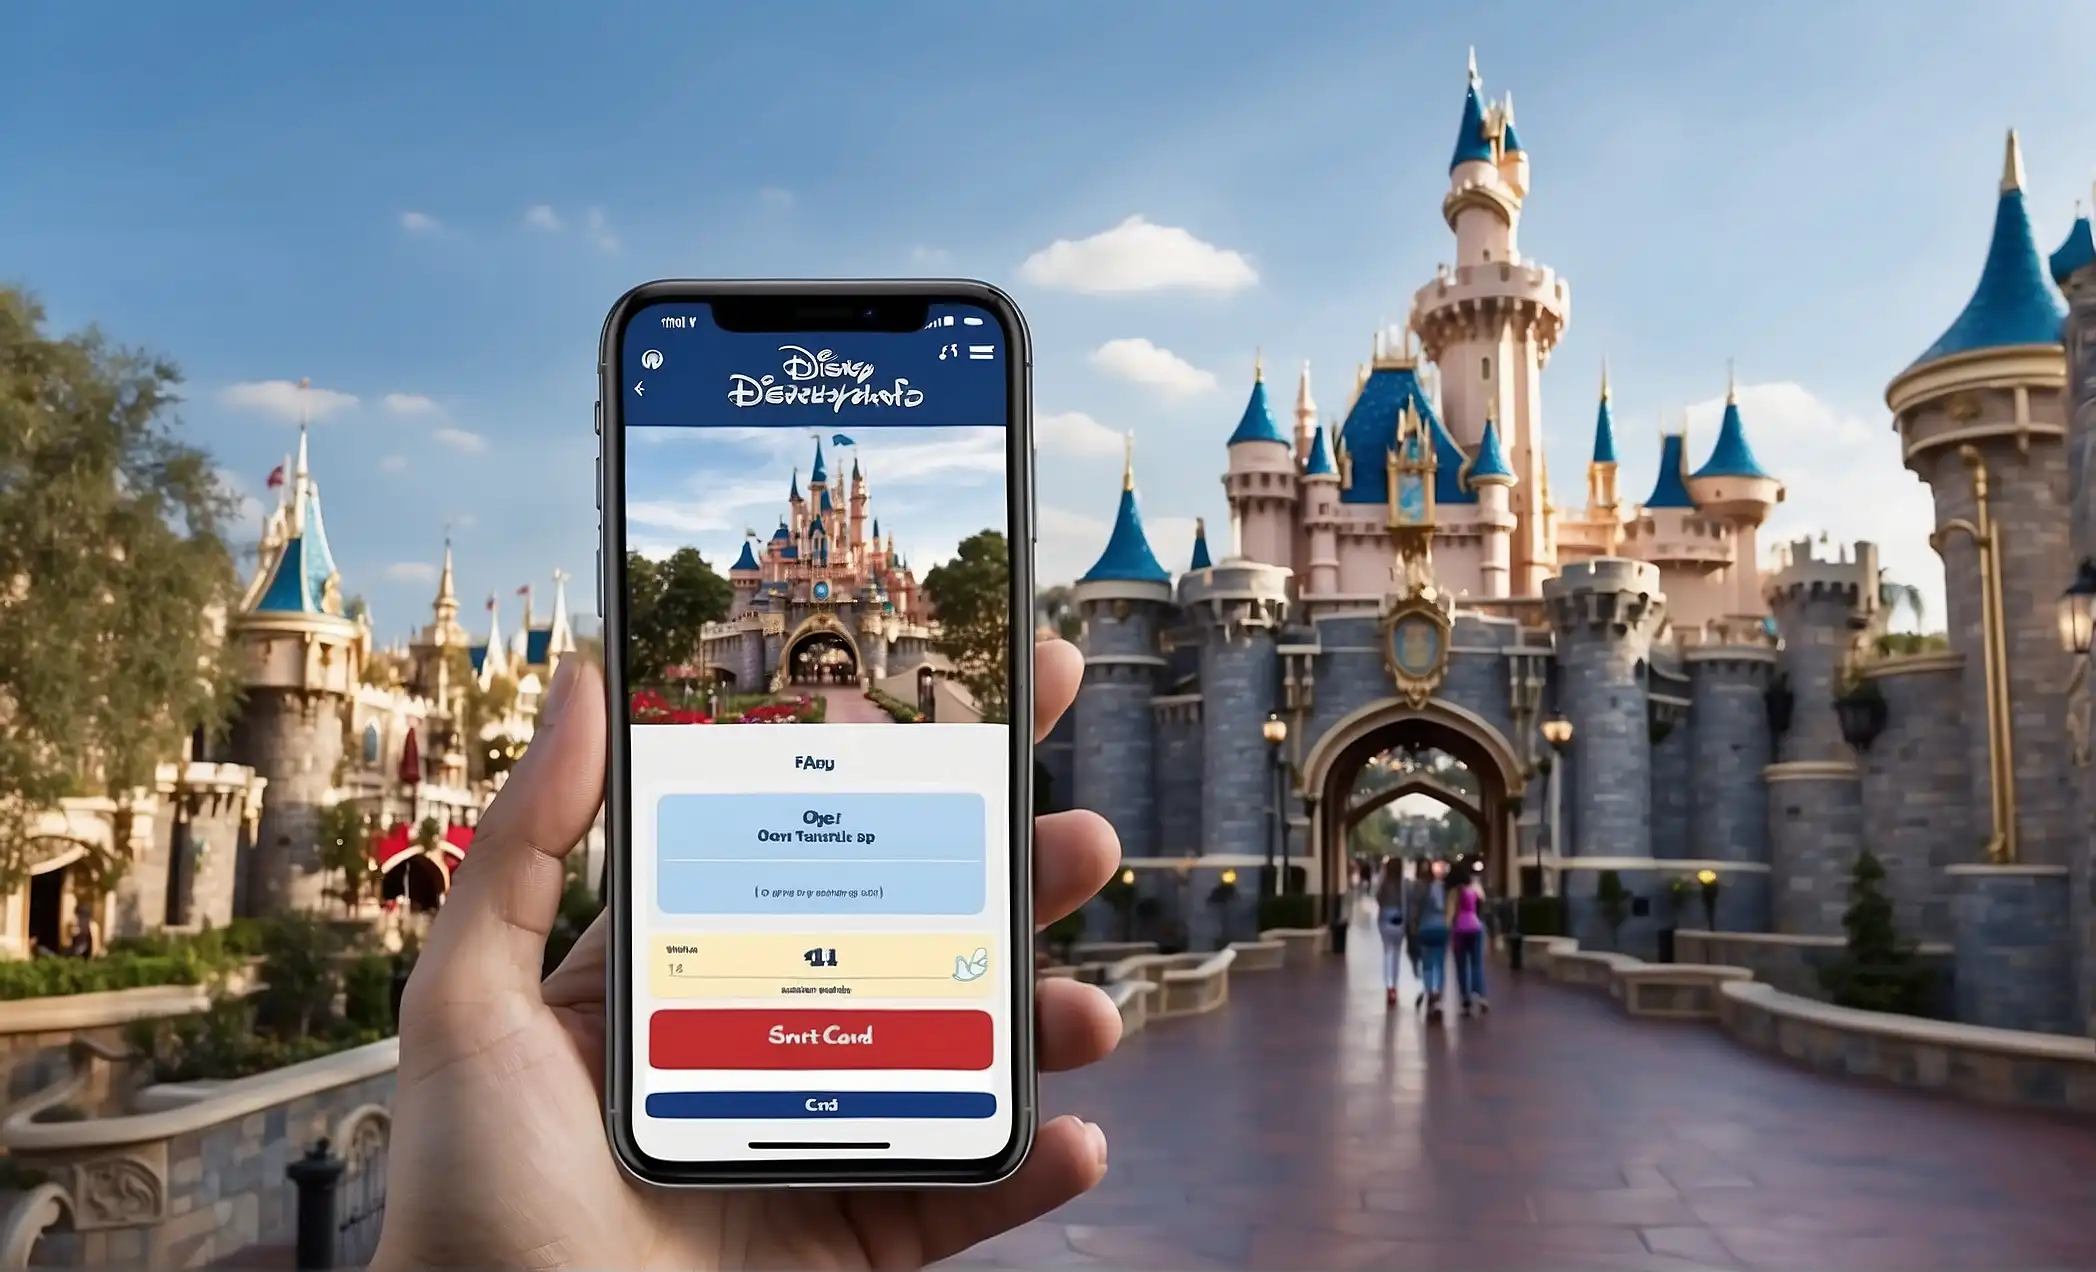 How to Add Disney Gift Card to Disneyland App